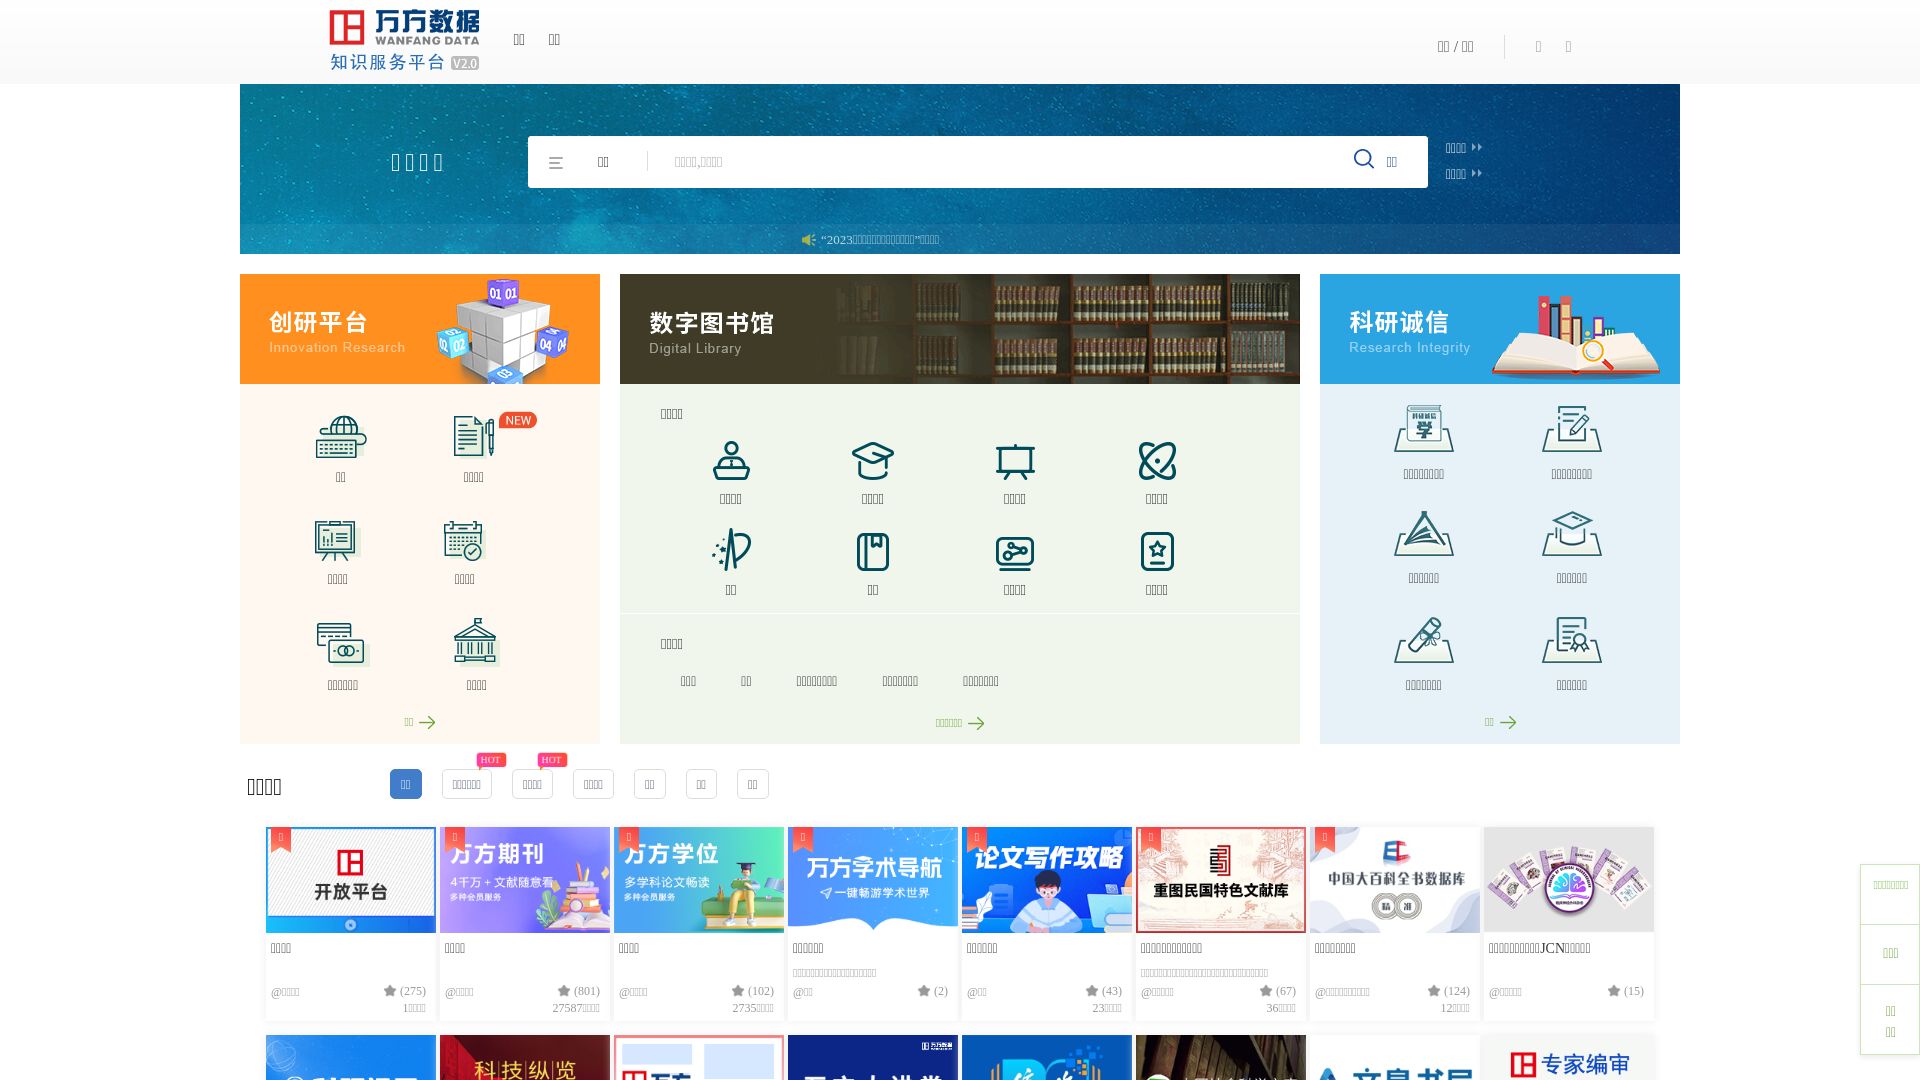 Website status wanfangdata.com.cn is   ONLINE